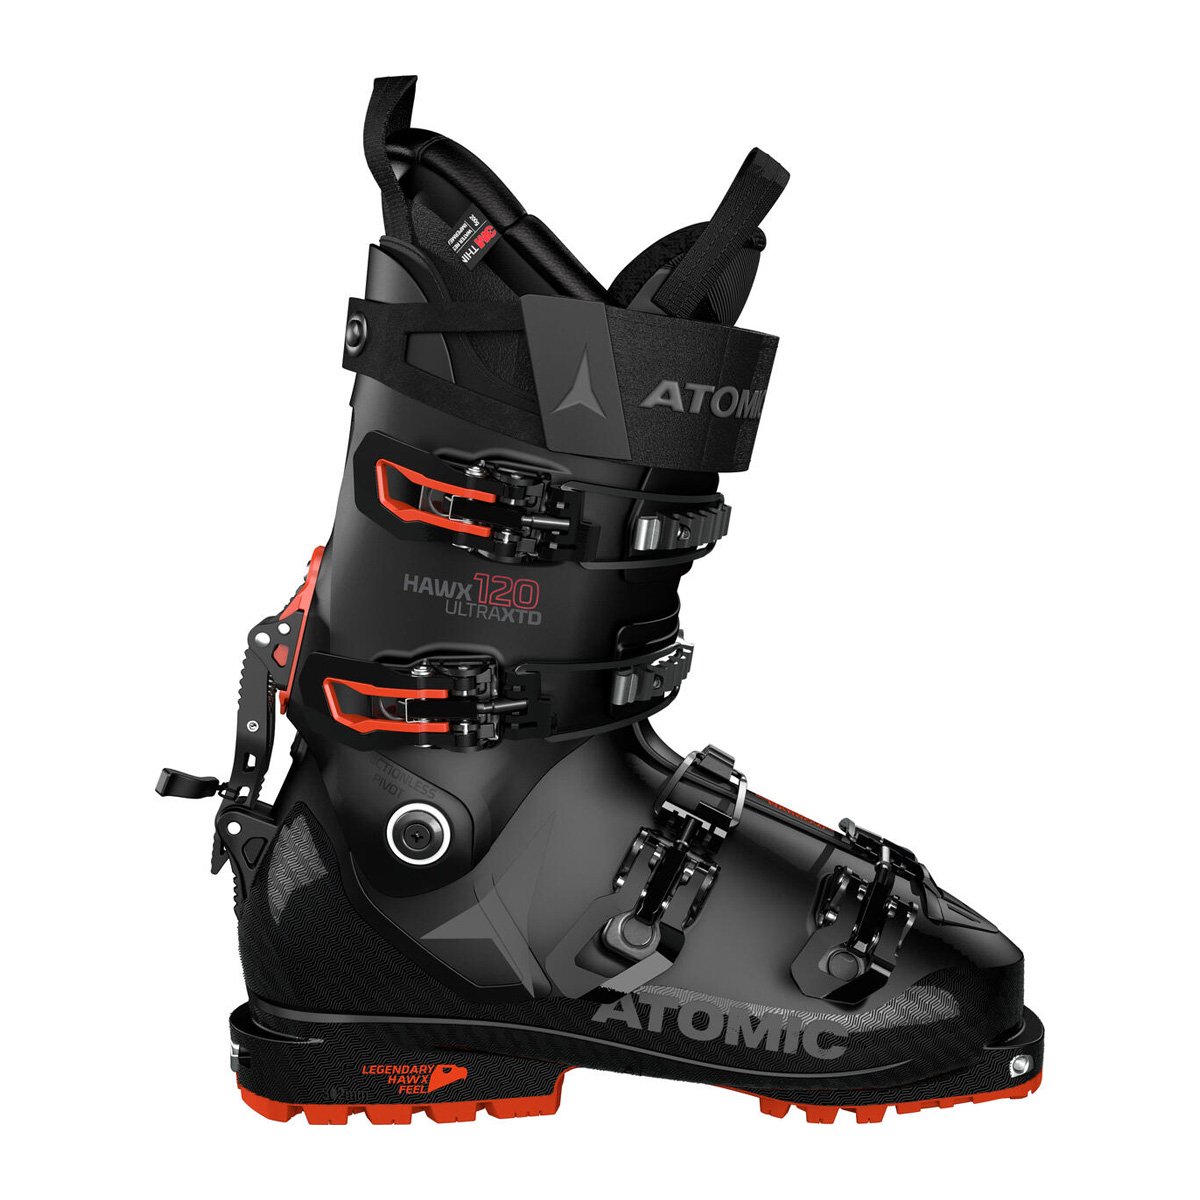 Горнолыжные ботинки Atomic Hawx Ultra Xtd 120 Ct 2021 black/red, 28-28,5 см